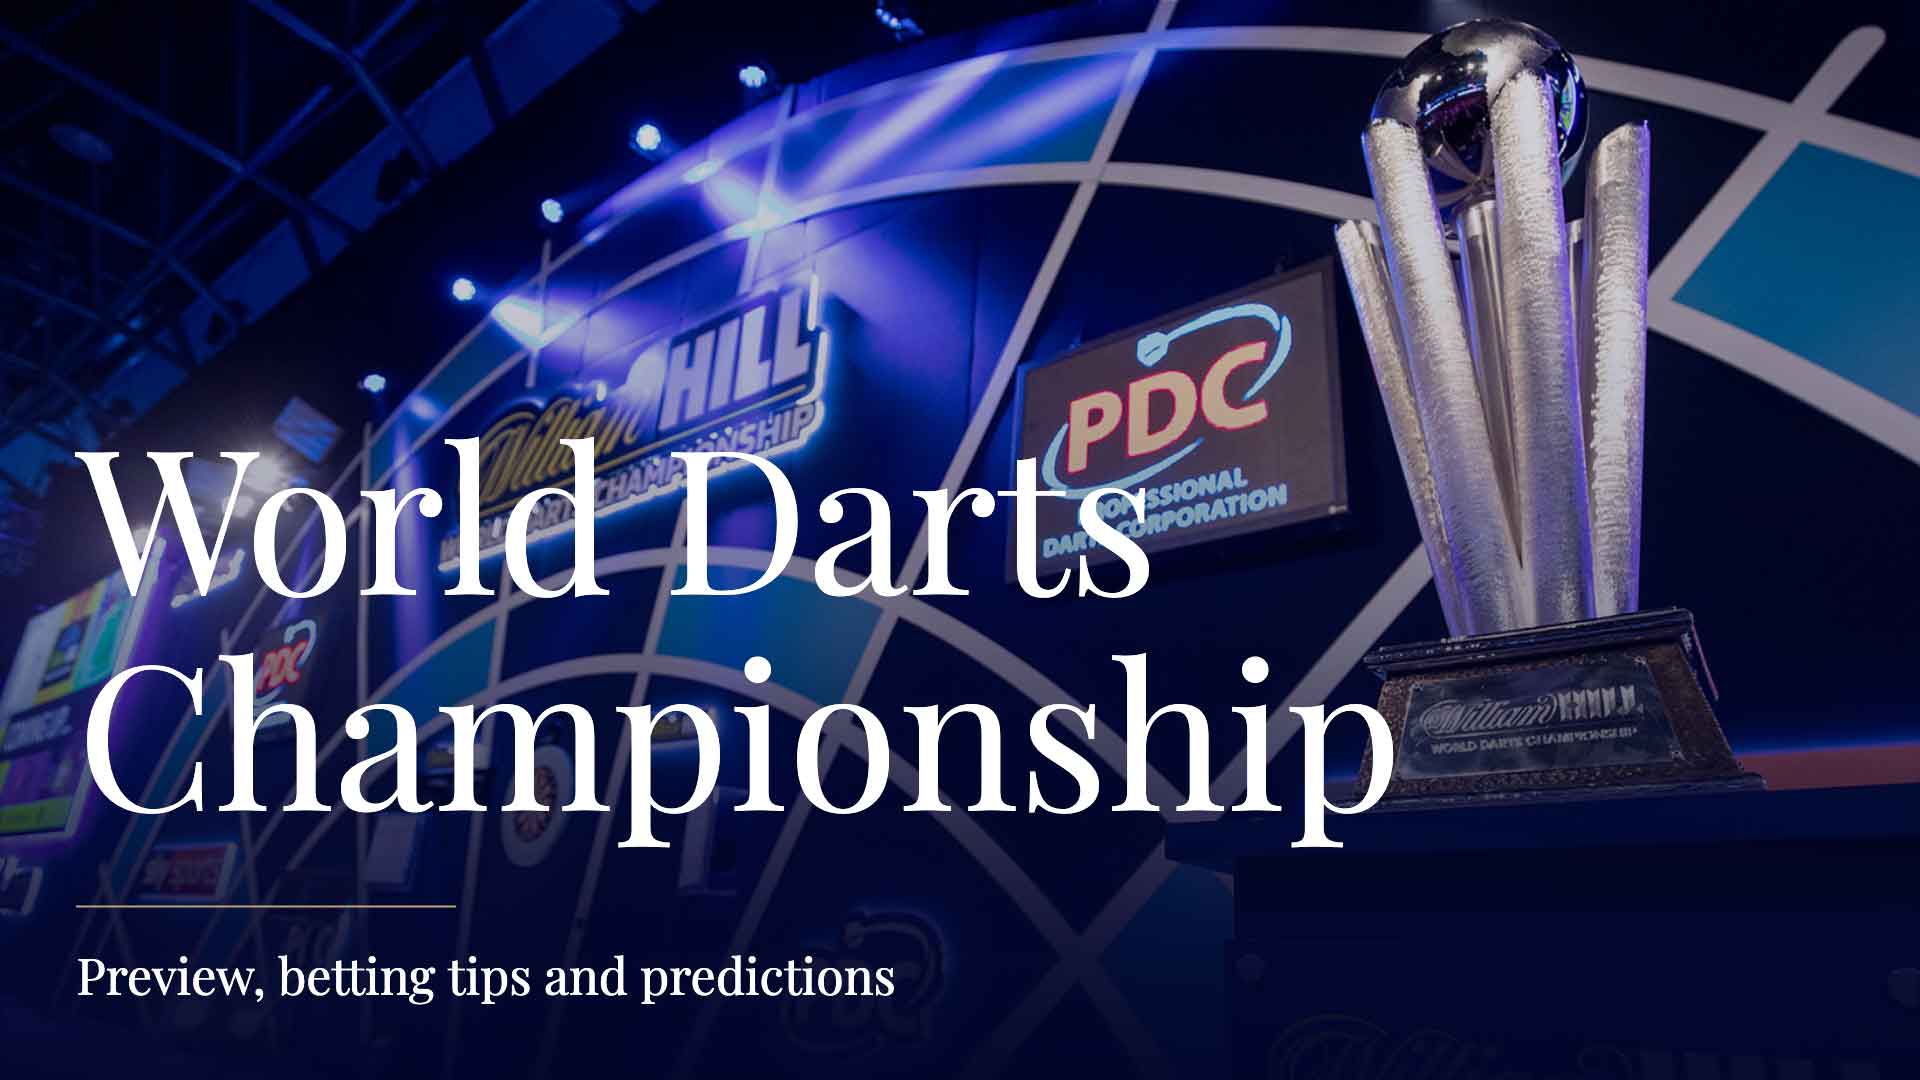 2024 PDC World Darts Championship Betting: 10 Pre-Tournament